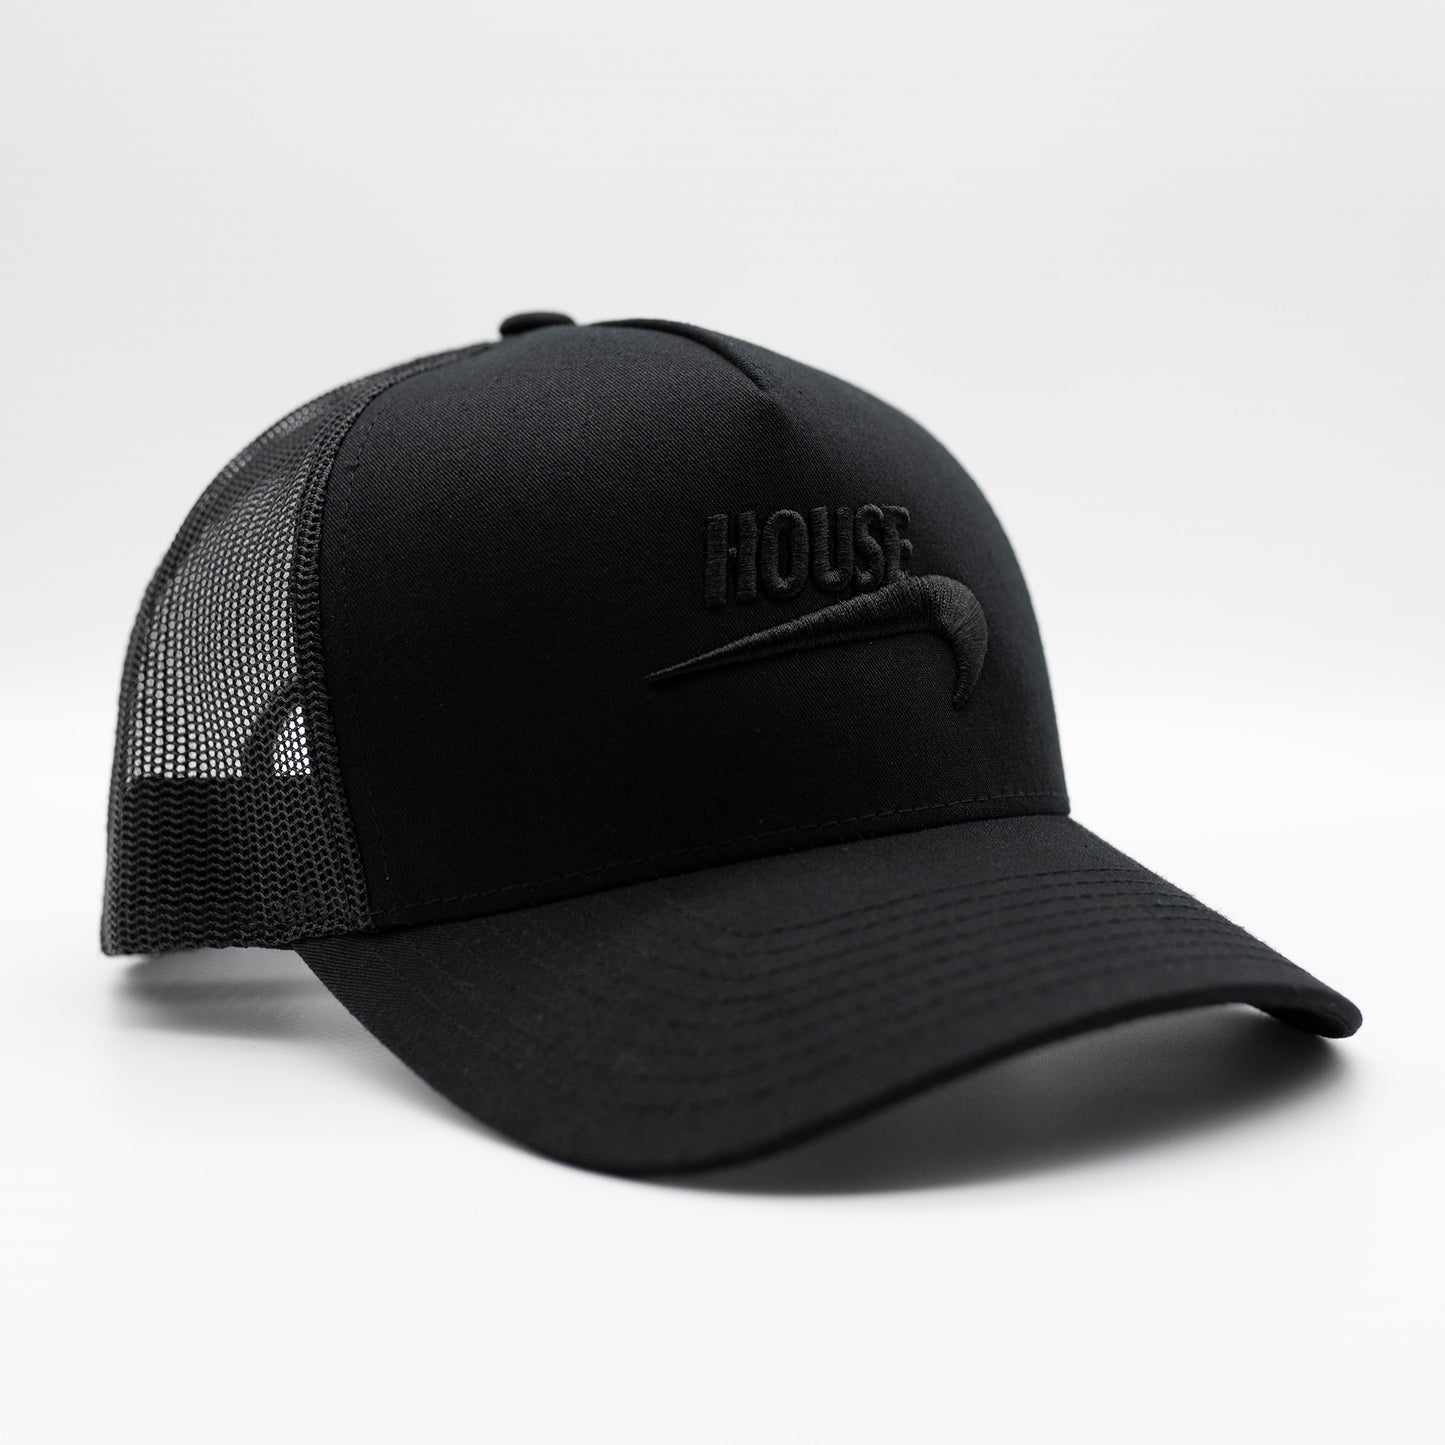 House Trucker Hat // Phantom Black - IKendoit.Shop